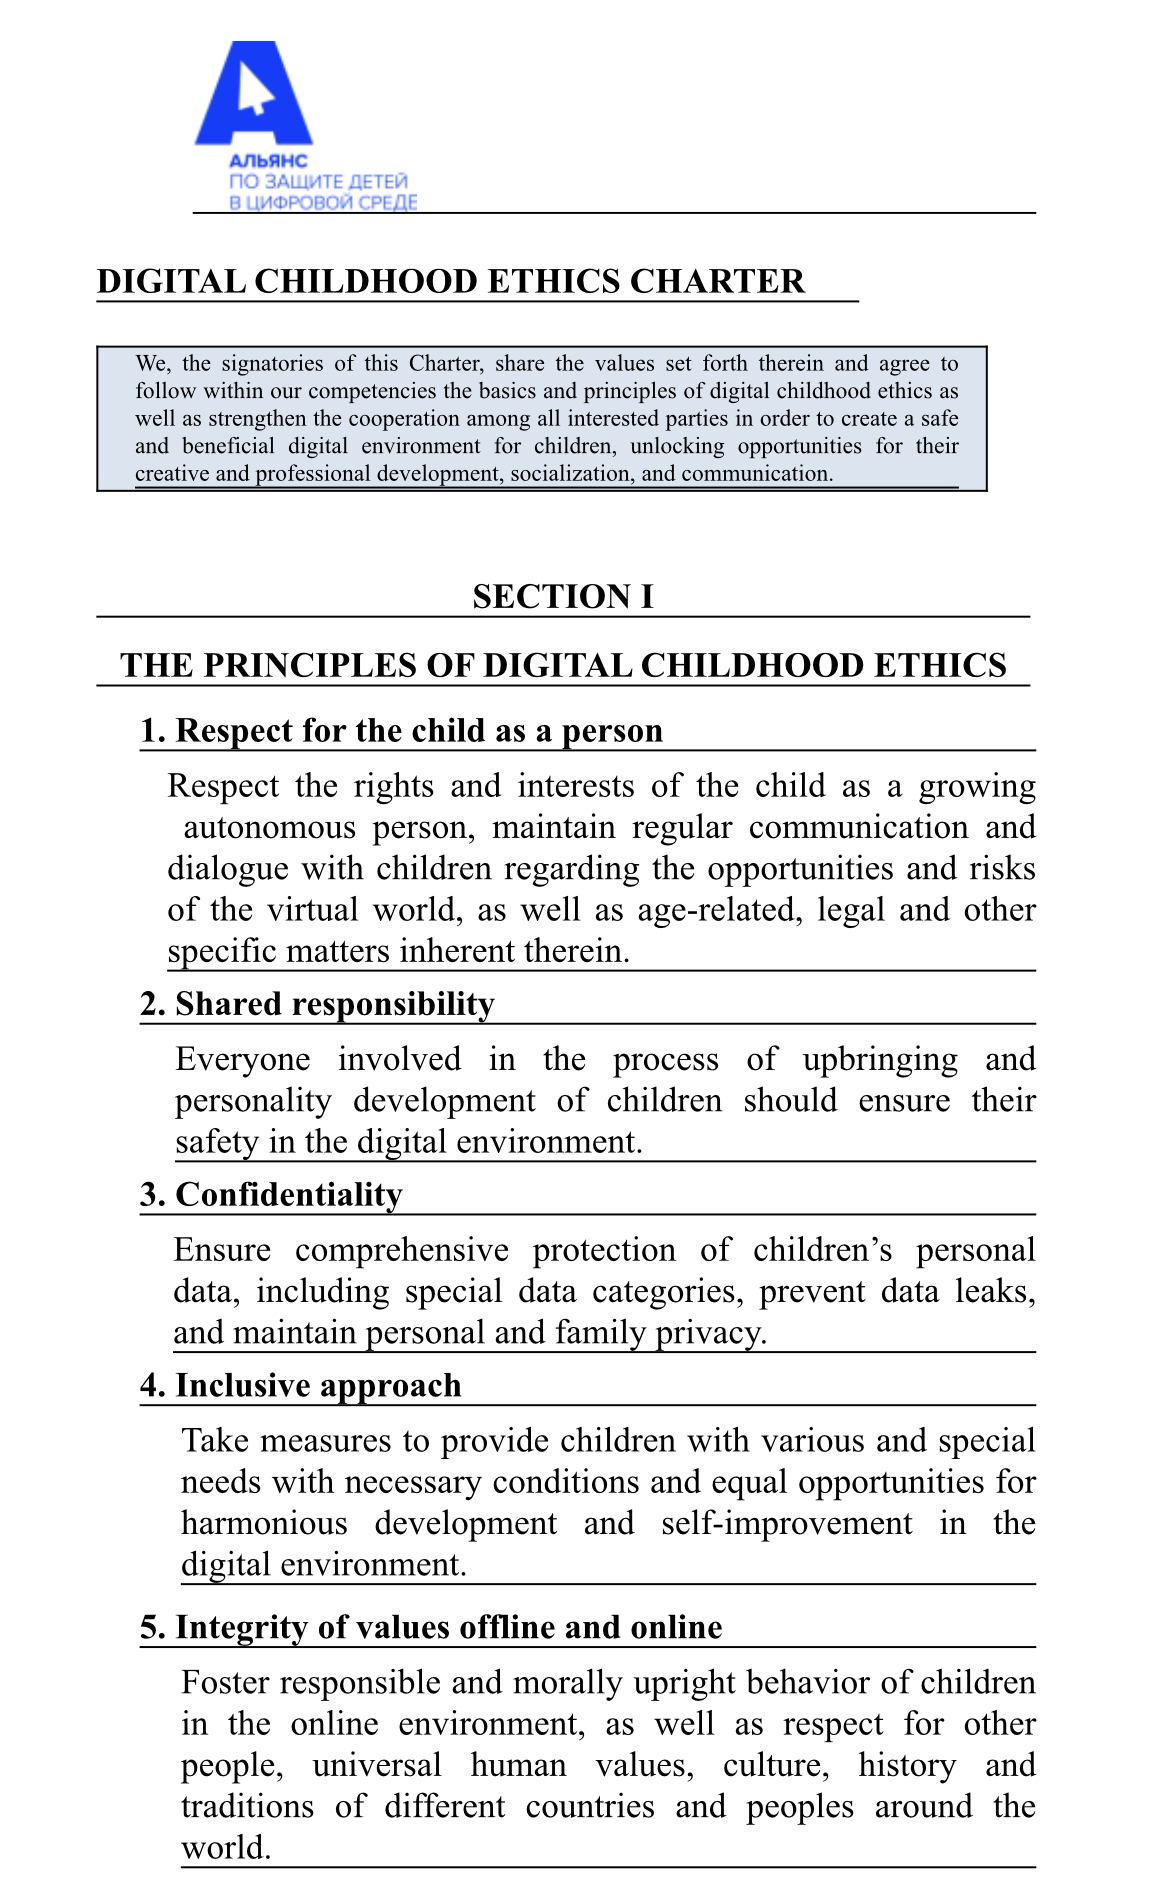 Digital Childhood Ethics Charter